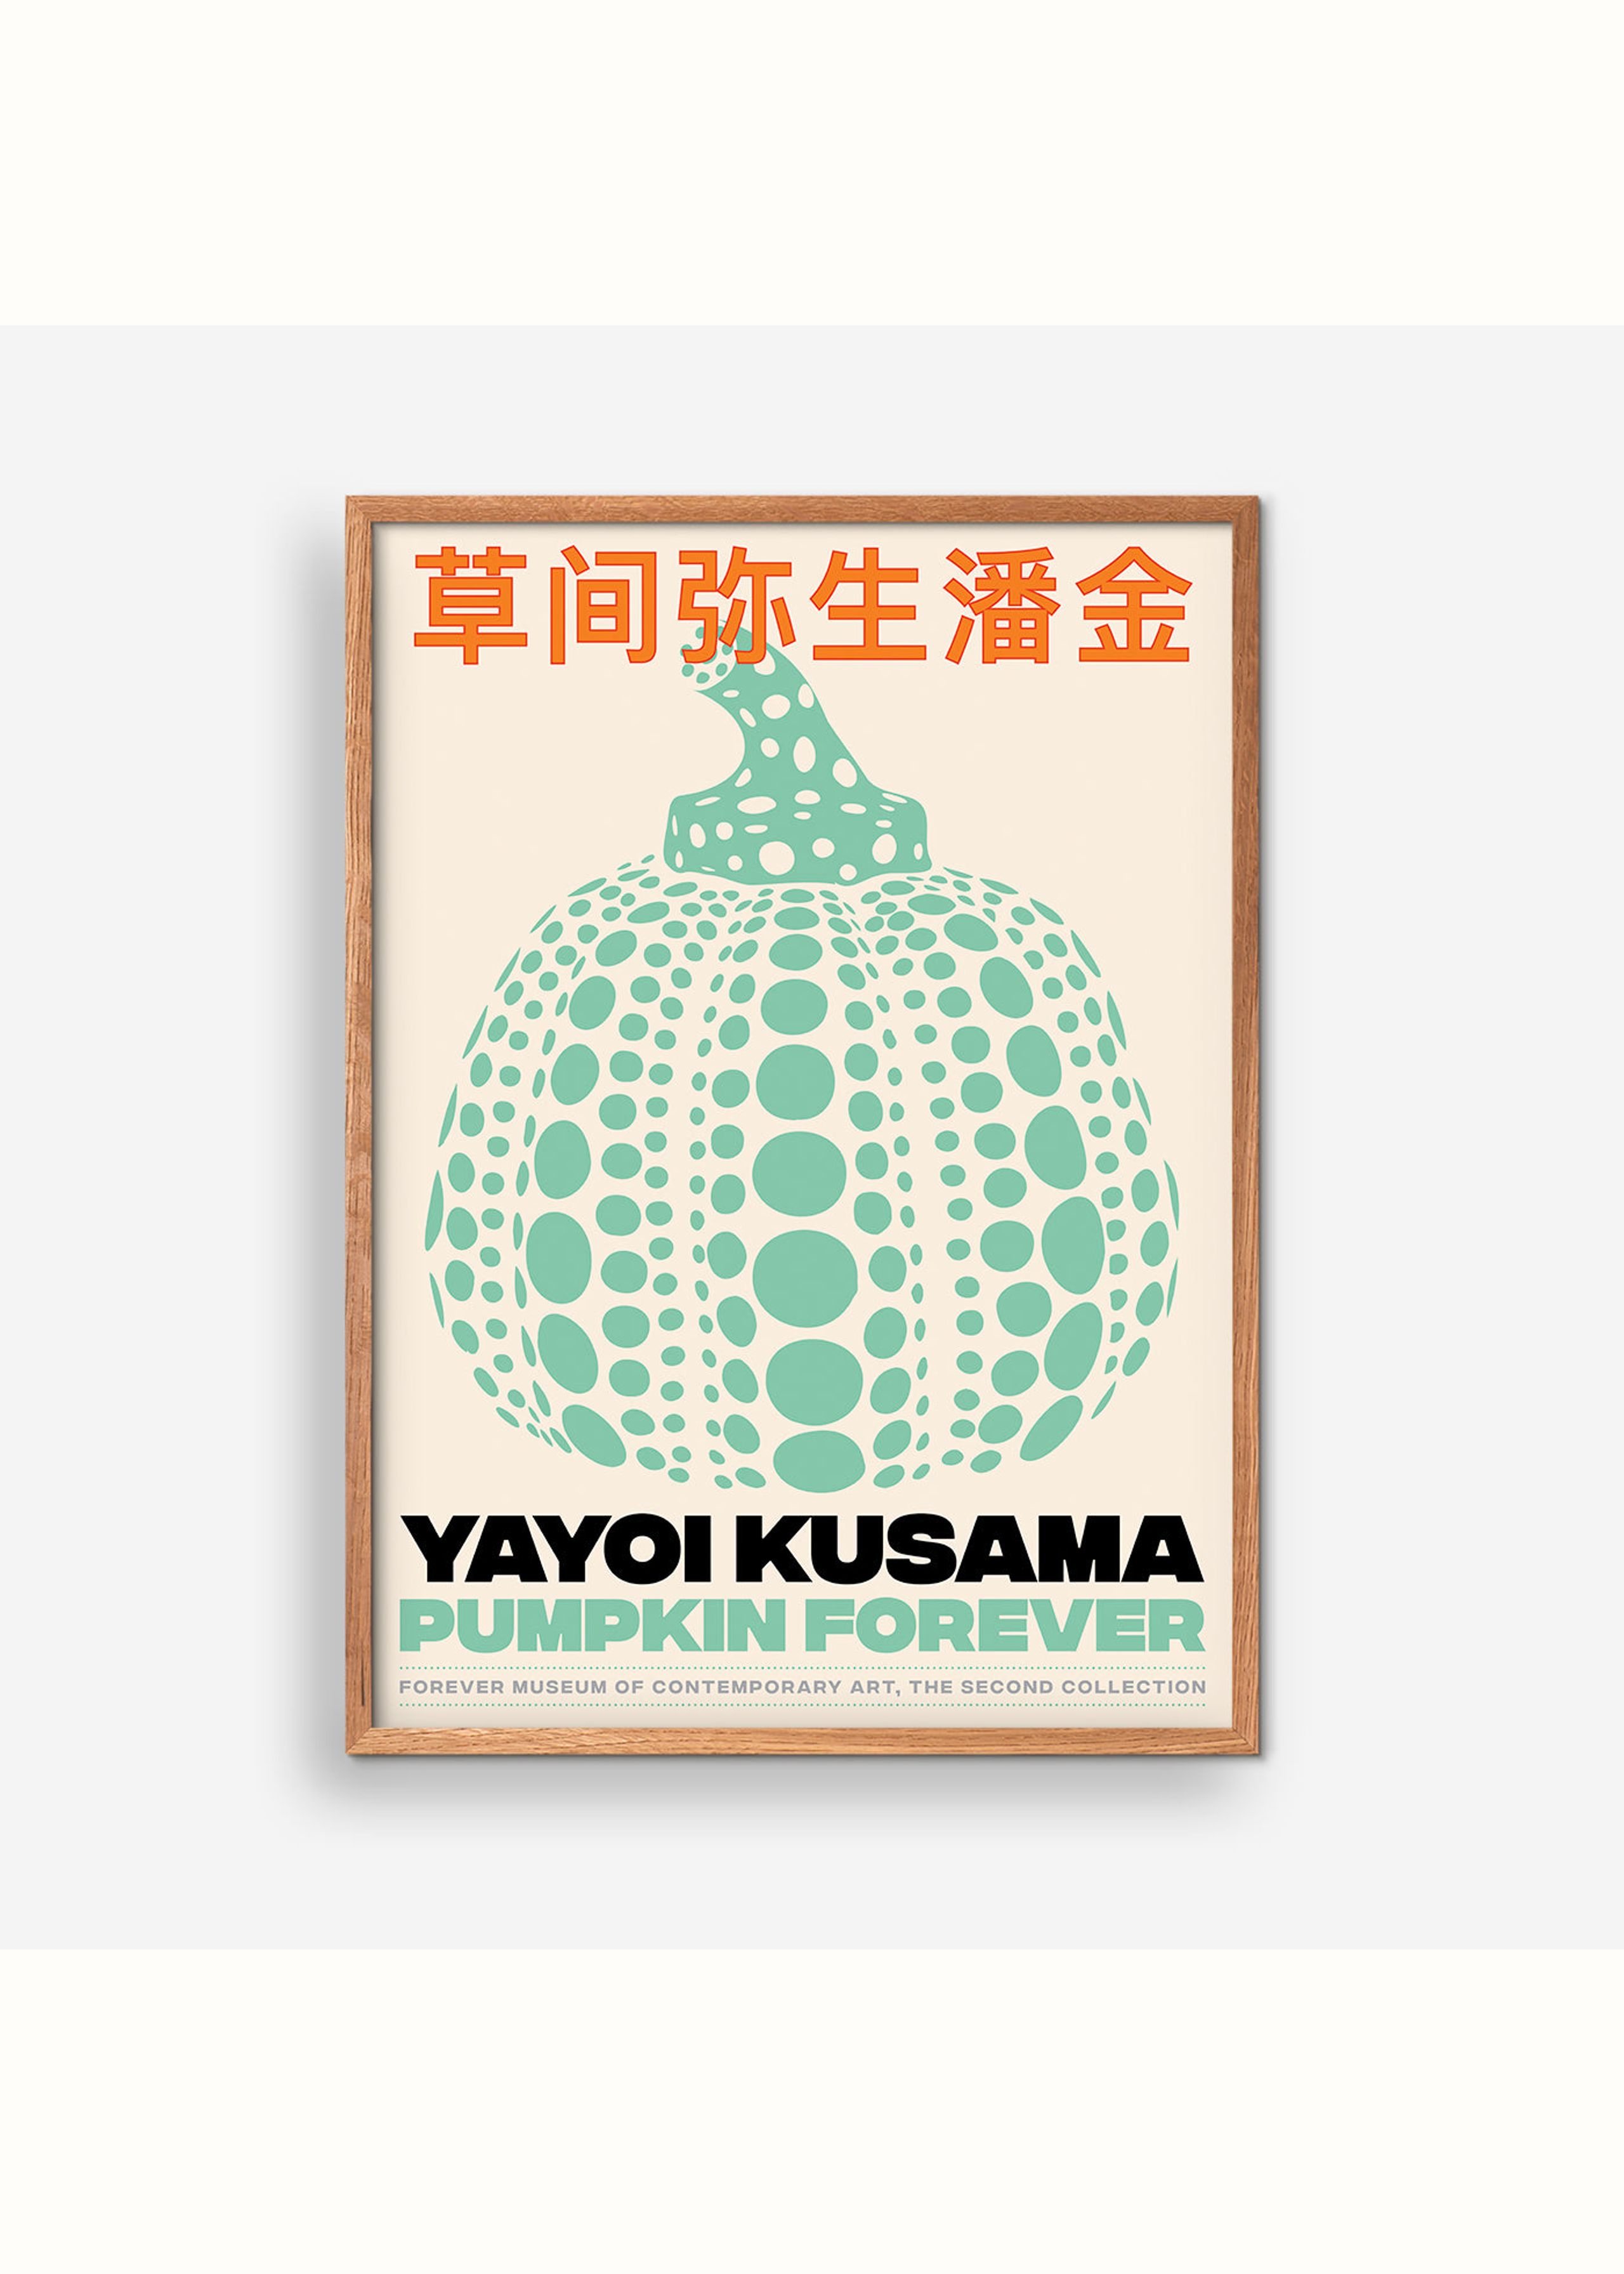 Yayoi Kusama Poster Japanese Art Print Japanese Poster Yayoi Kusama Pumpkin Forever Yayoi Kusama Print Japanese Painting